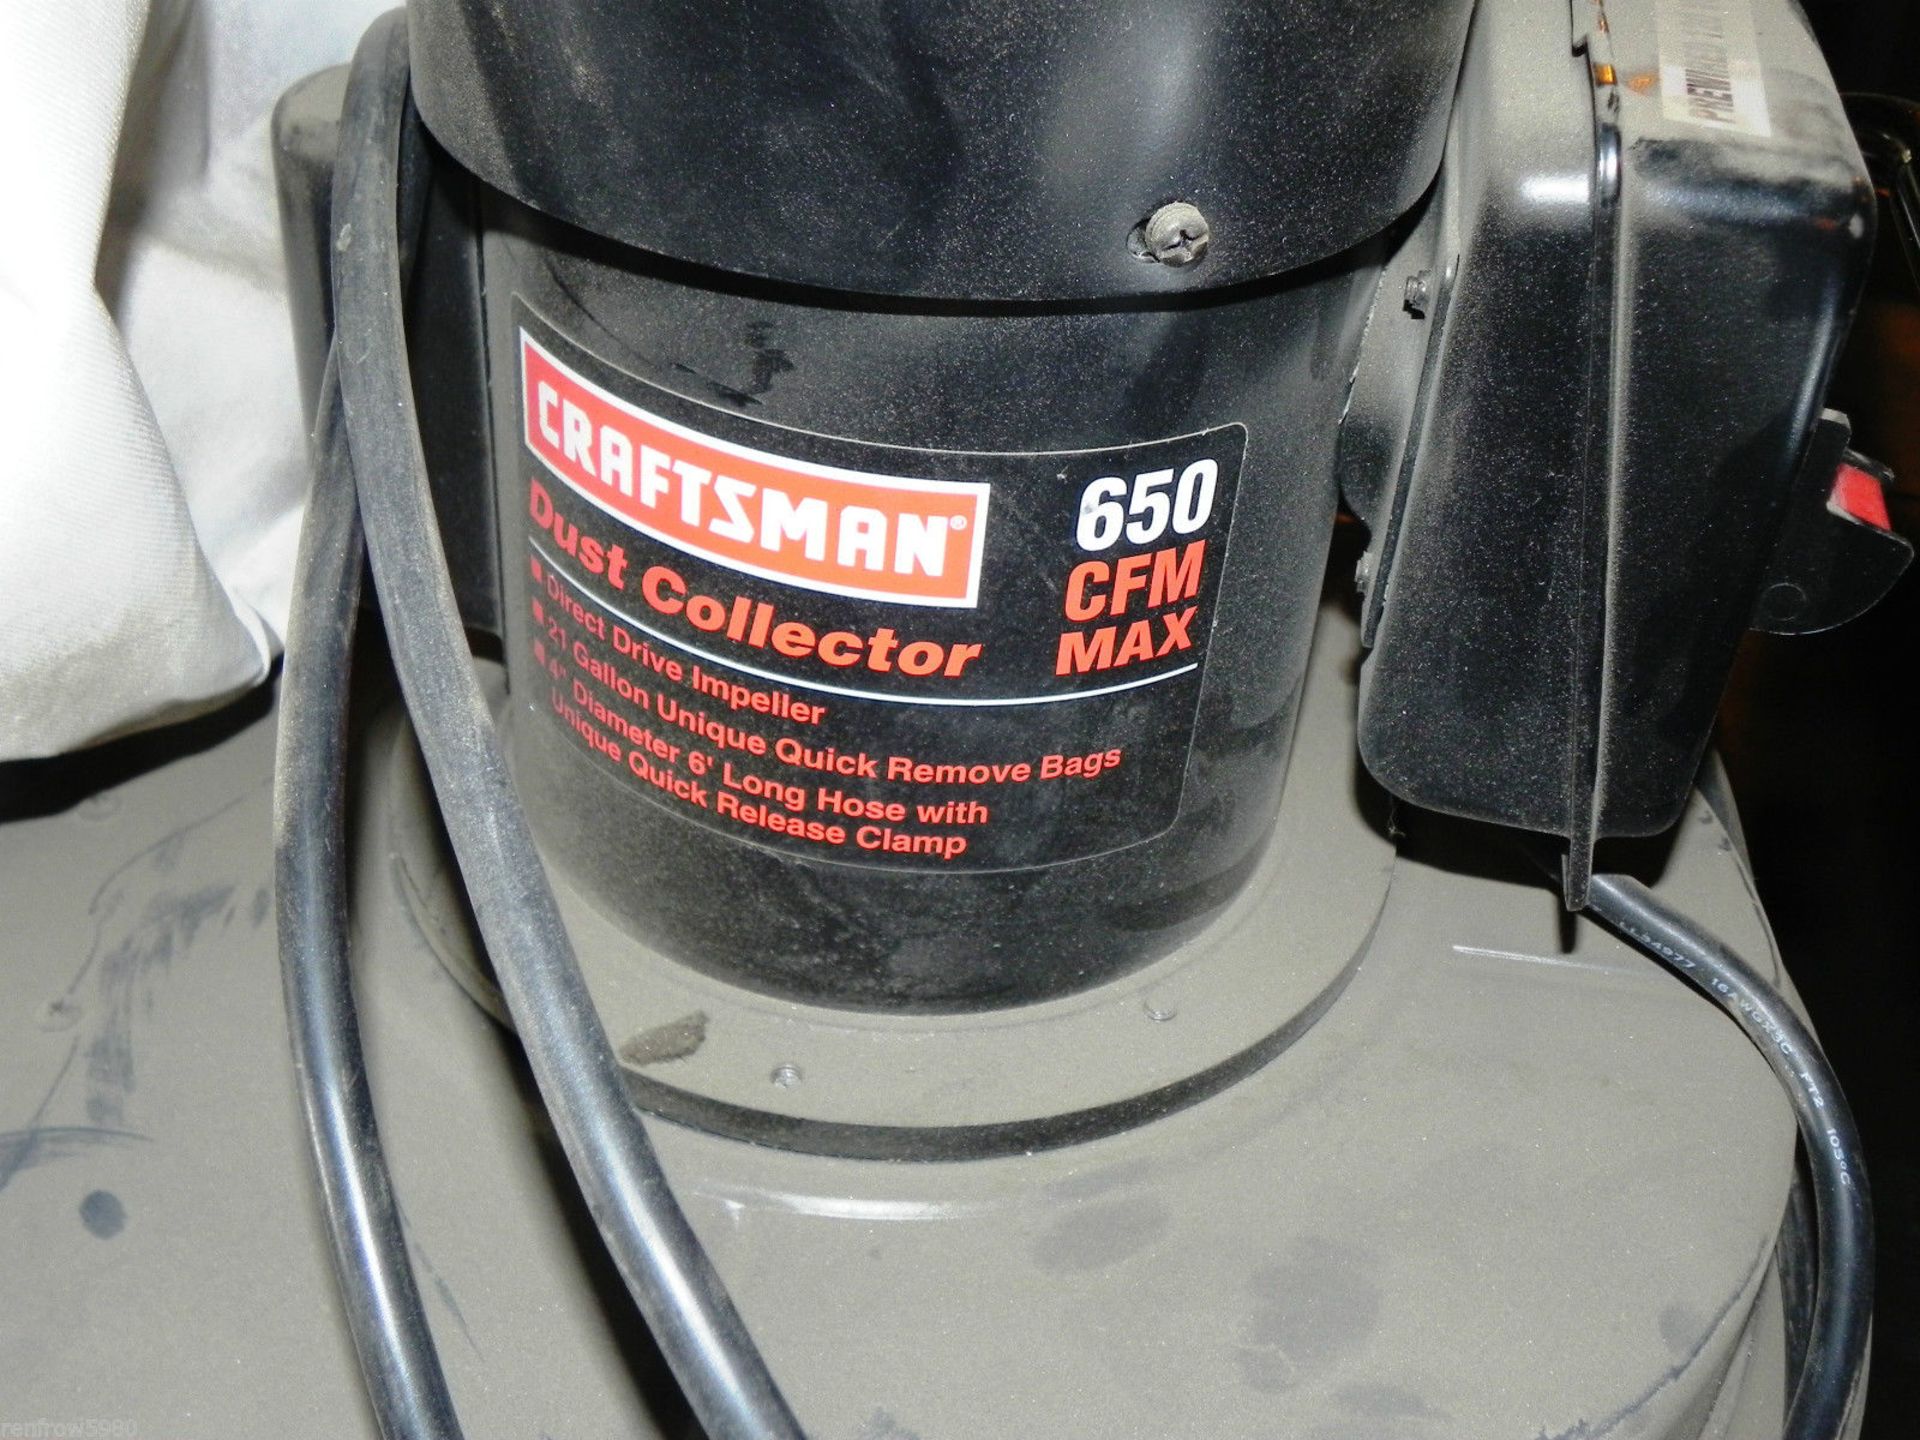 Craftsman 650 CFM Dust Collector 113.299790 - Image 2 of 4